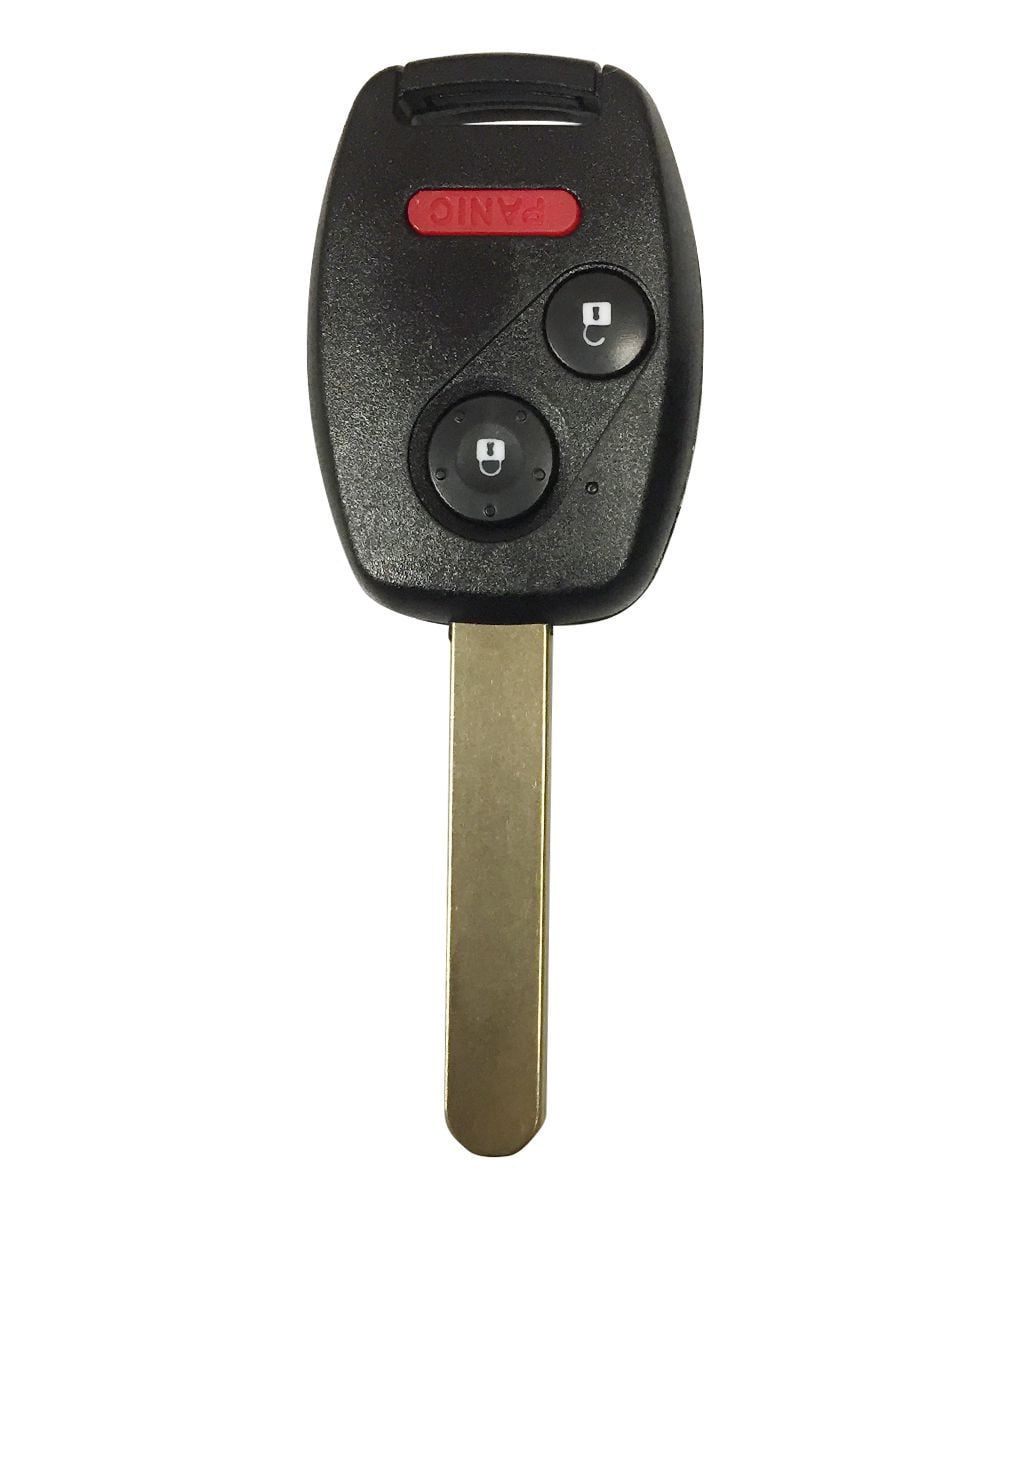 2 For 2006 2007 2008 2009 2010 2011 2012 2013 Honda Civic Remote Car Key Fob 